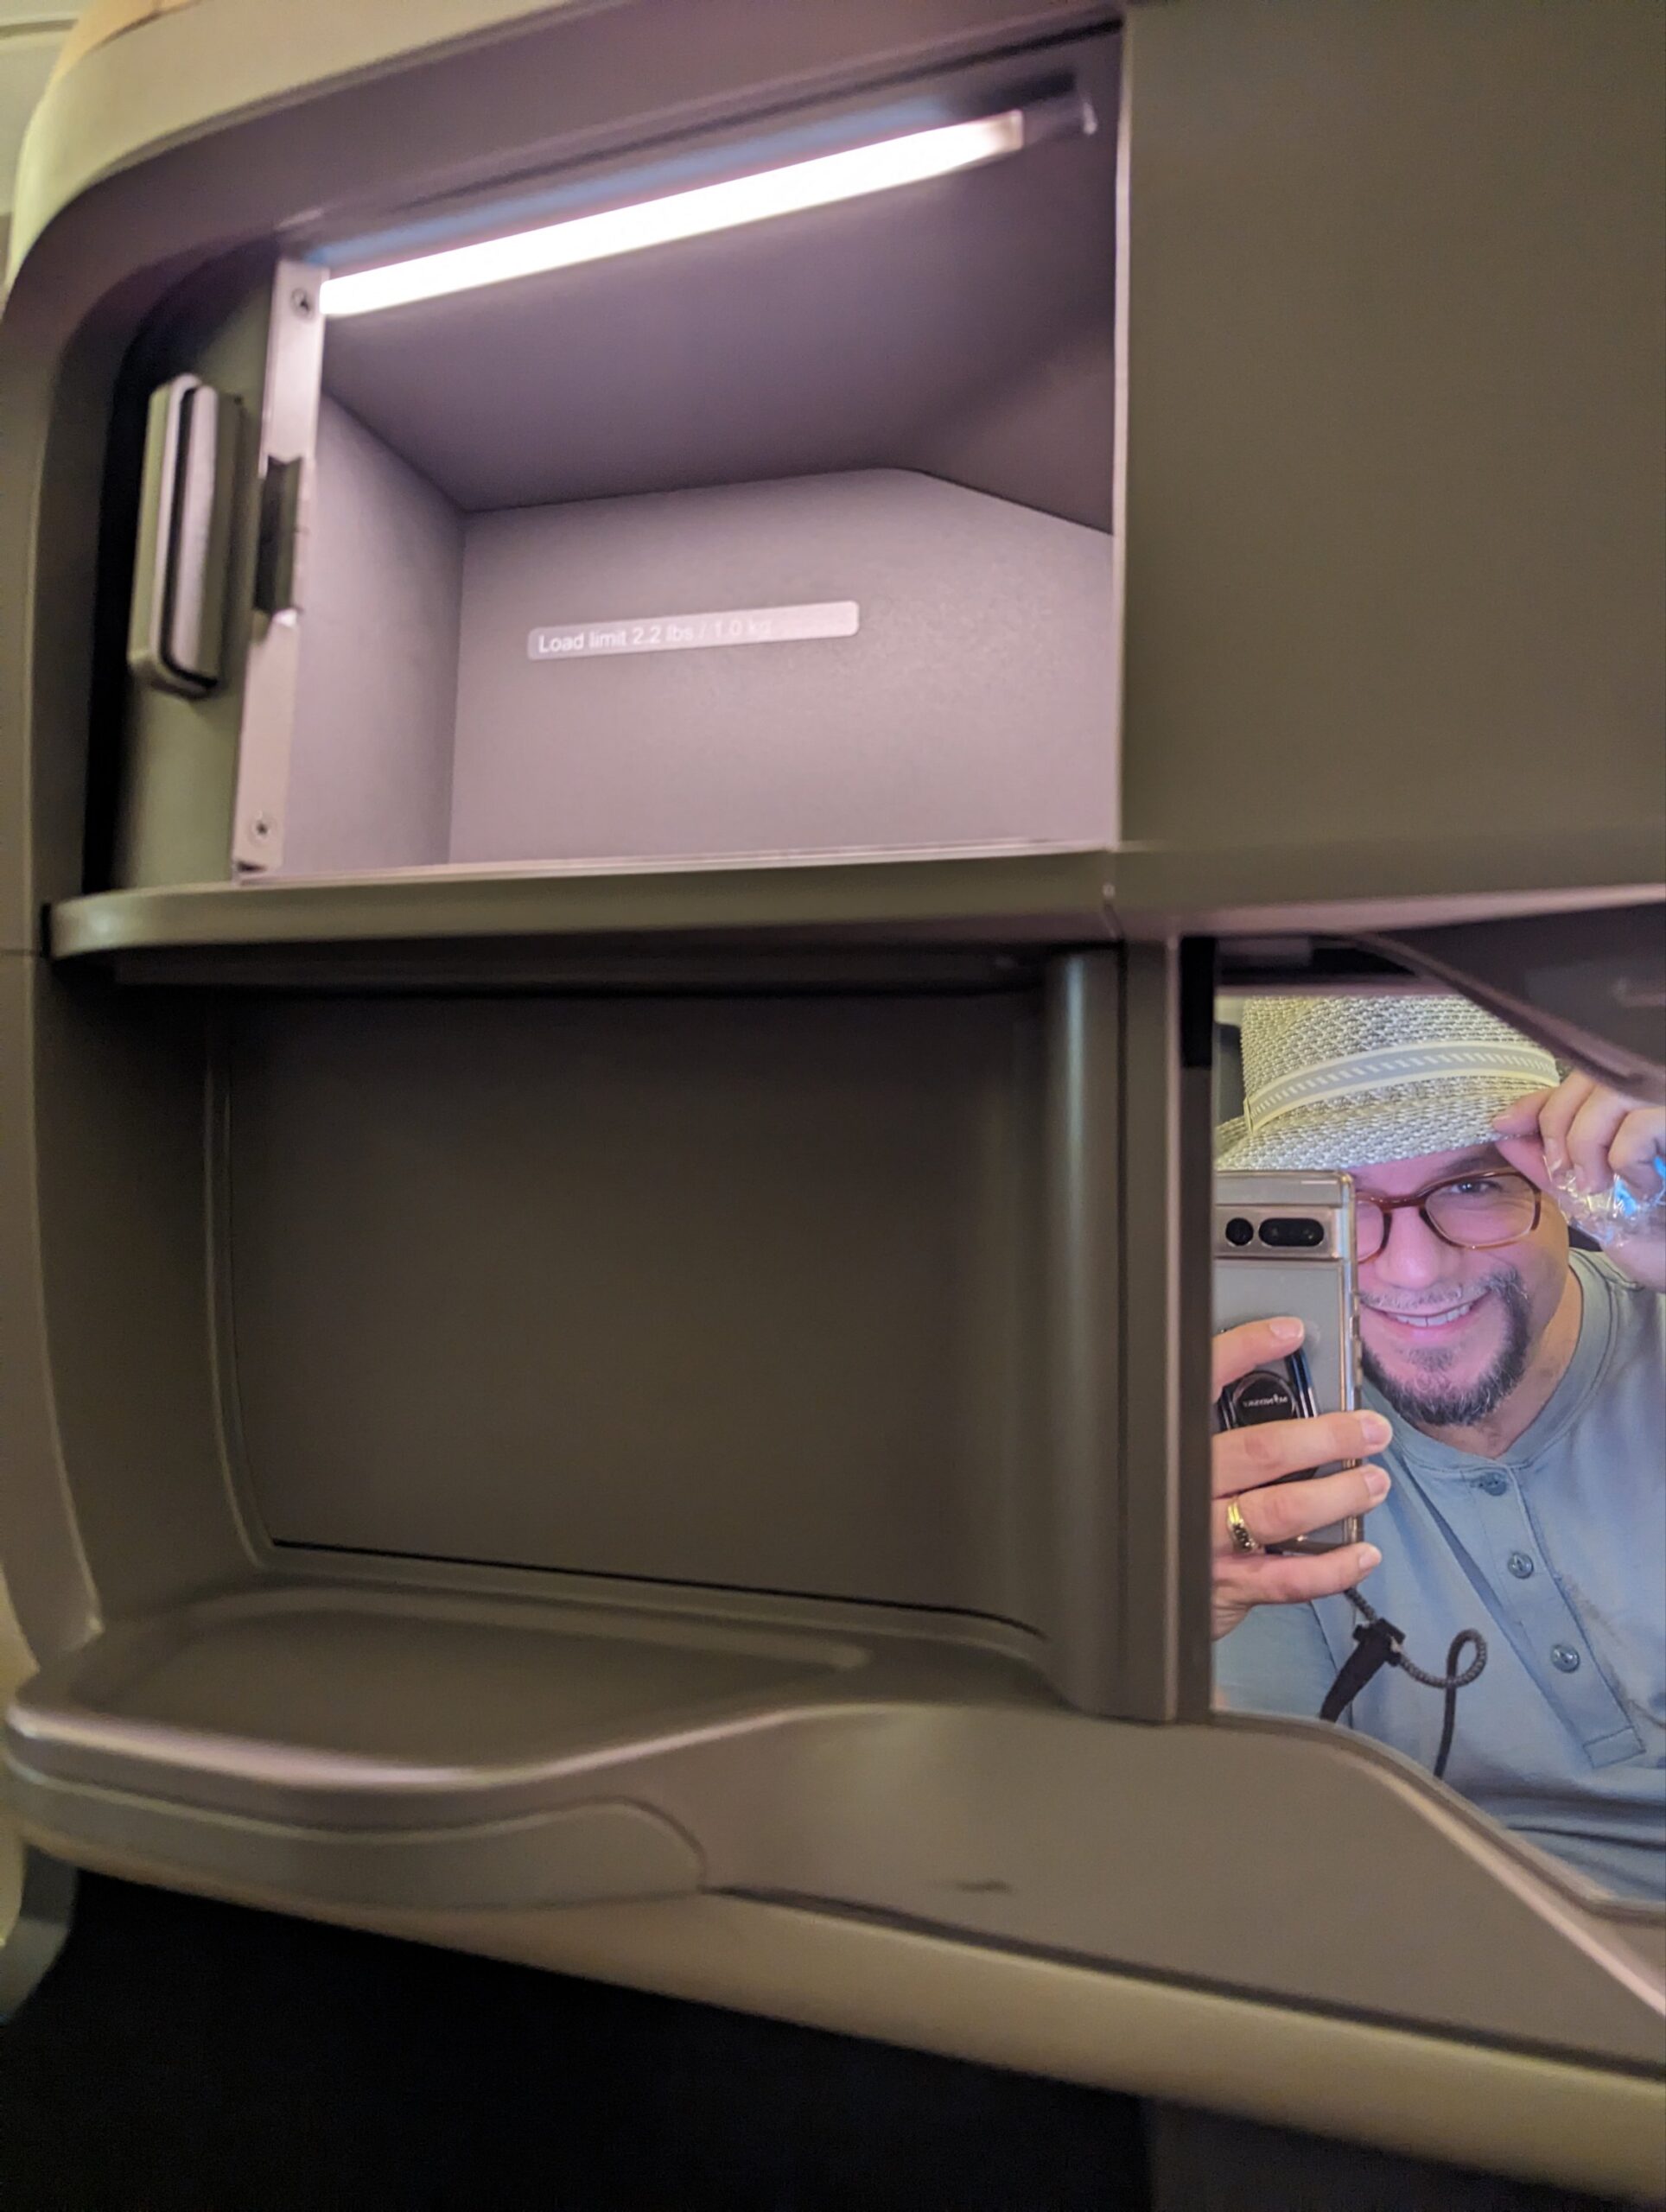 a man taking a selfie in an open safe